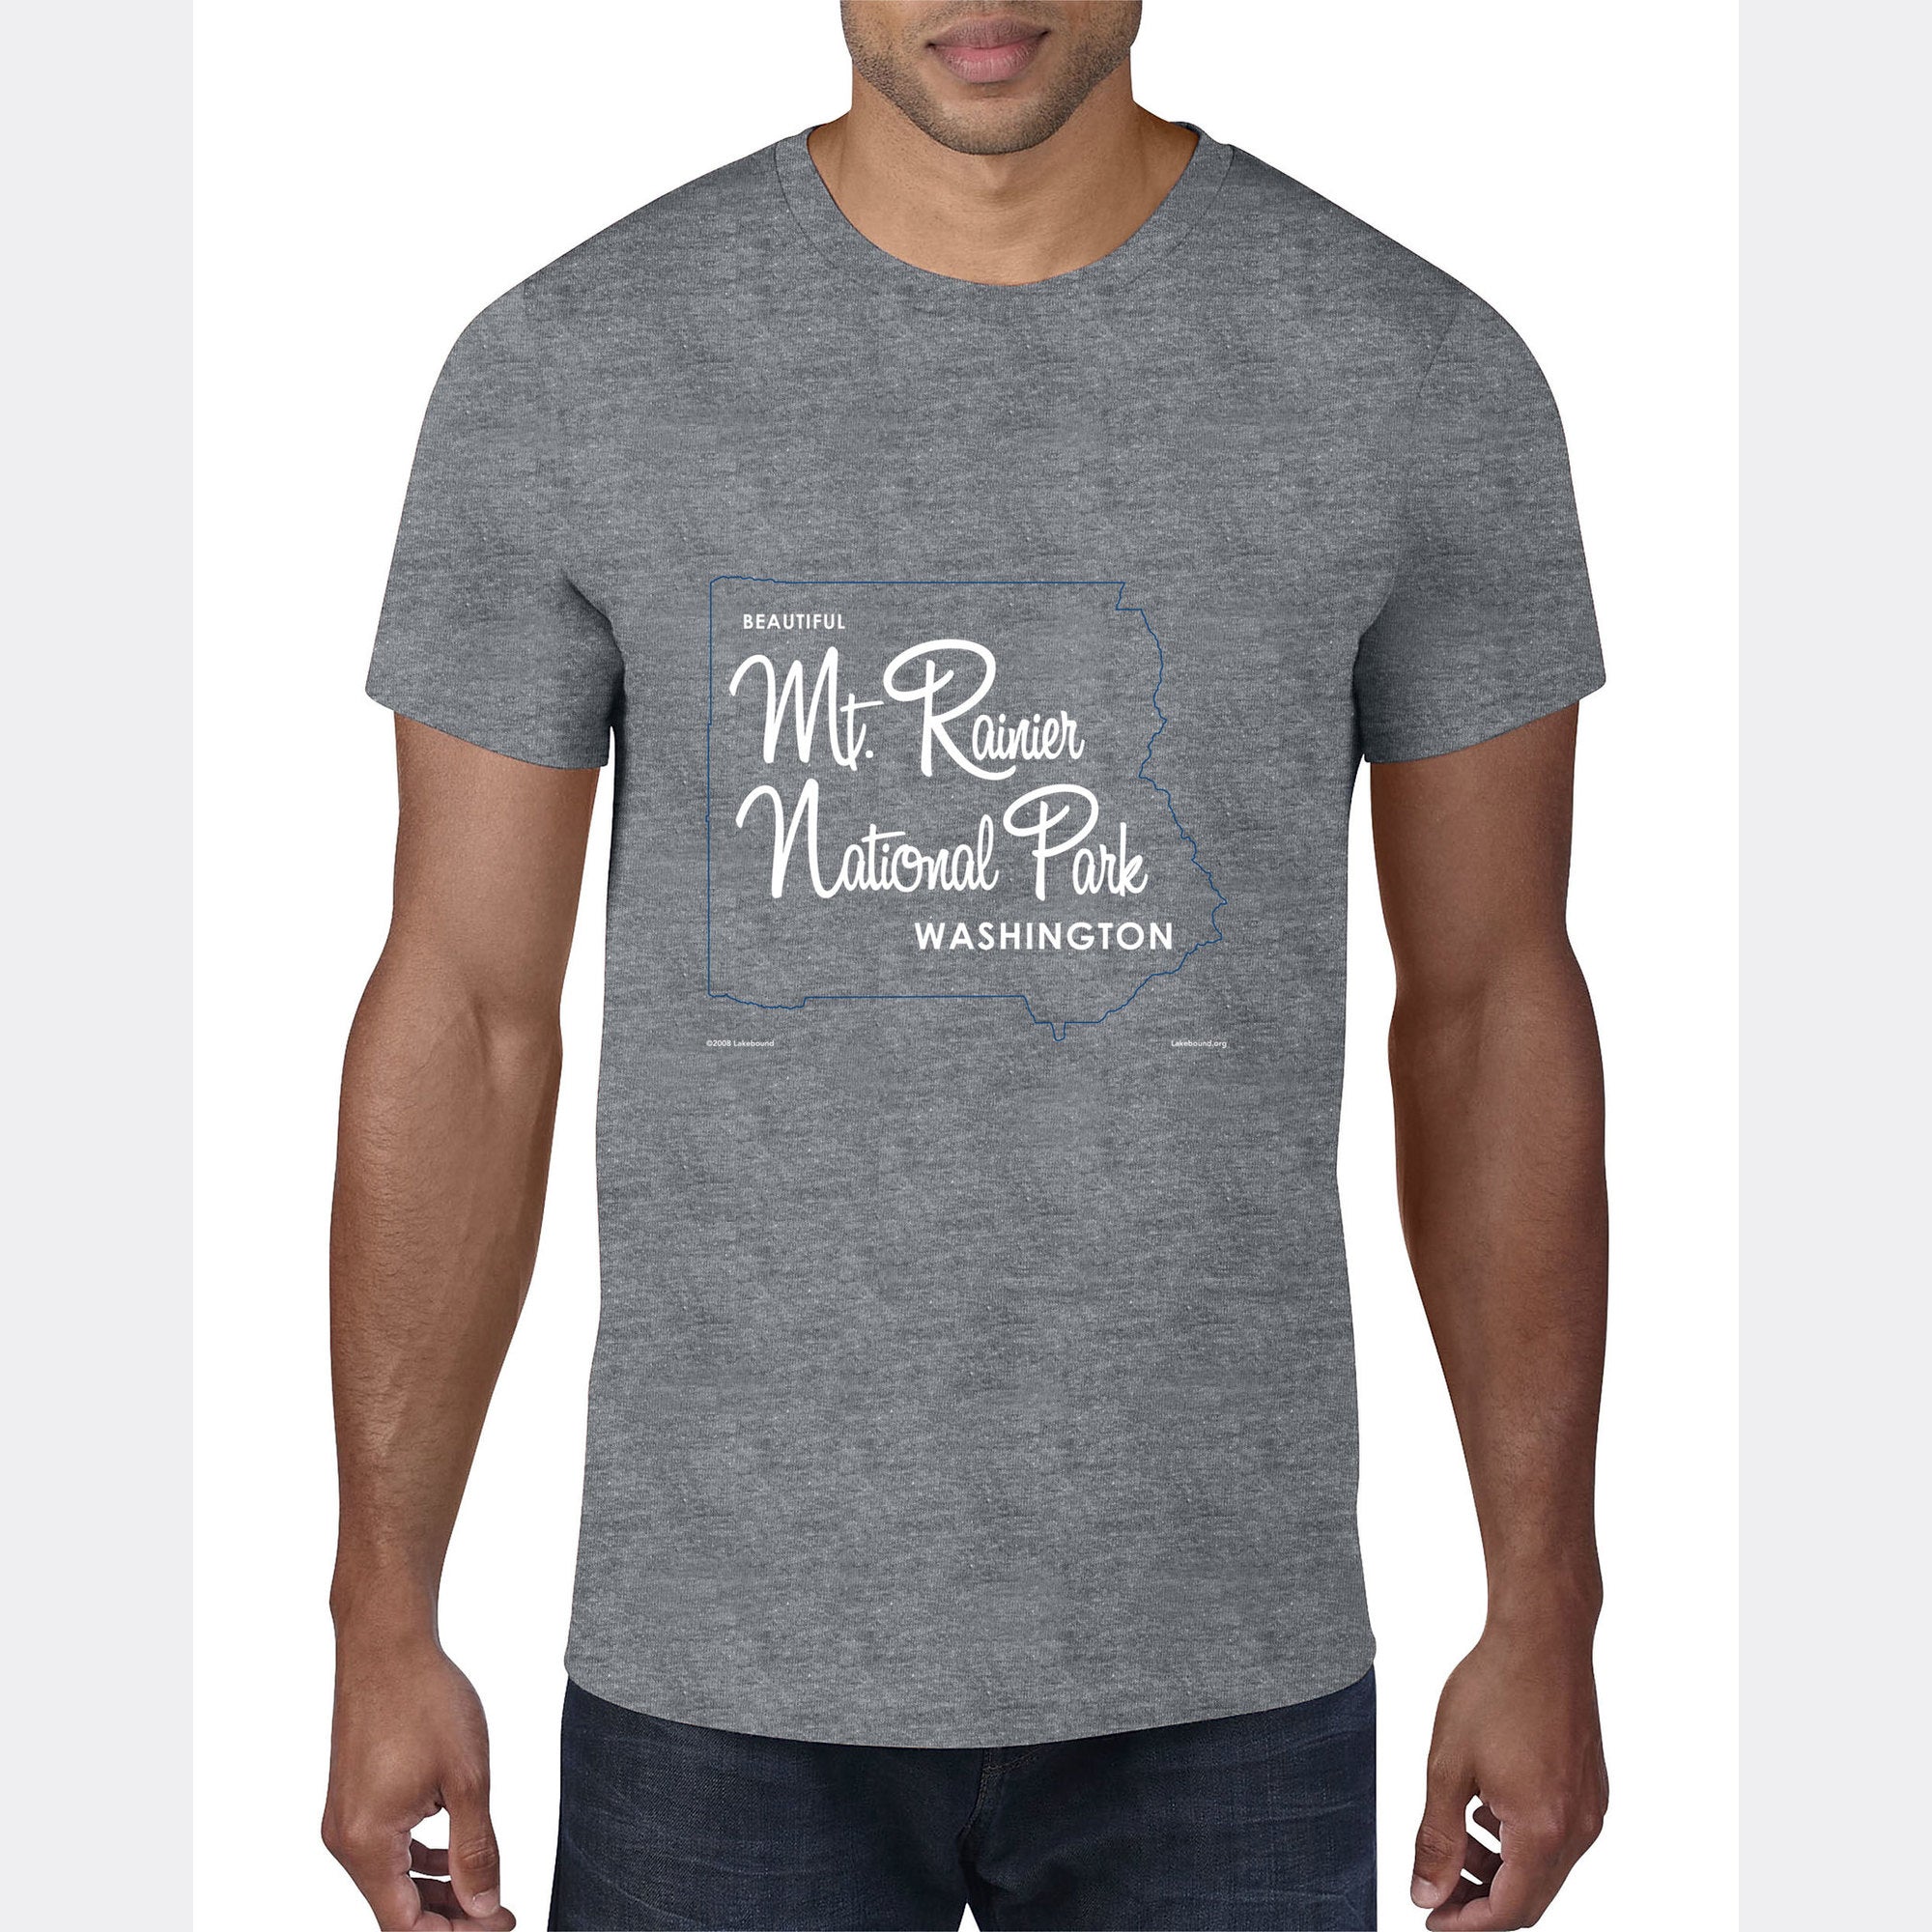 Mt. Rainier Washington, T-Shirt